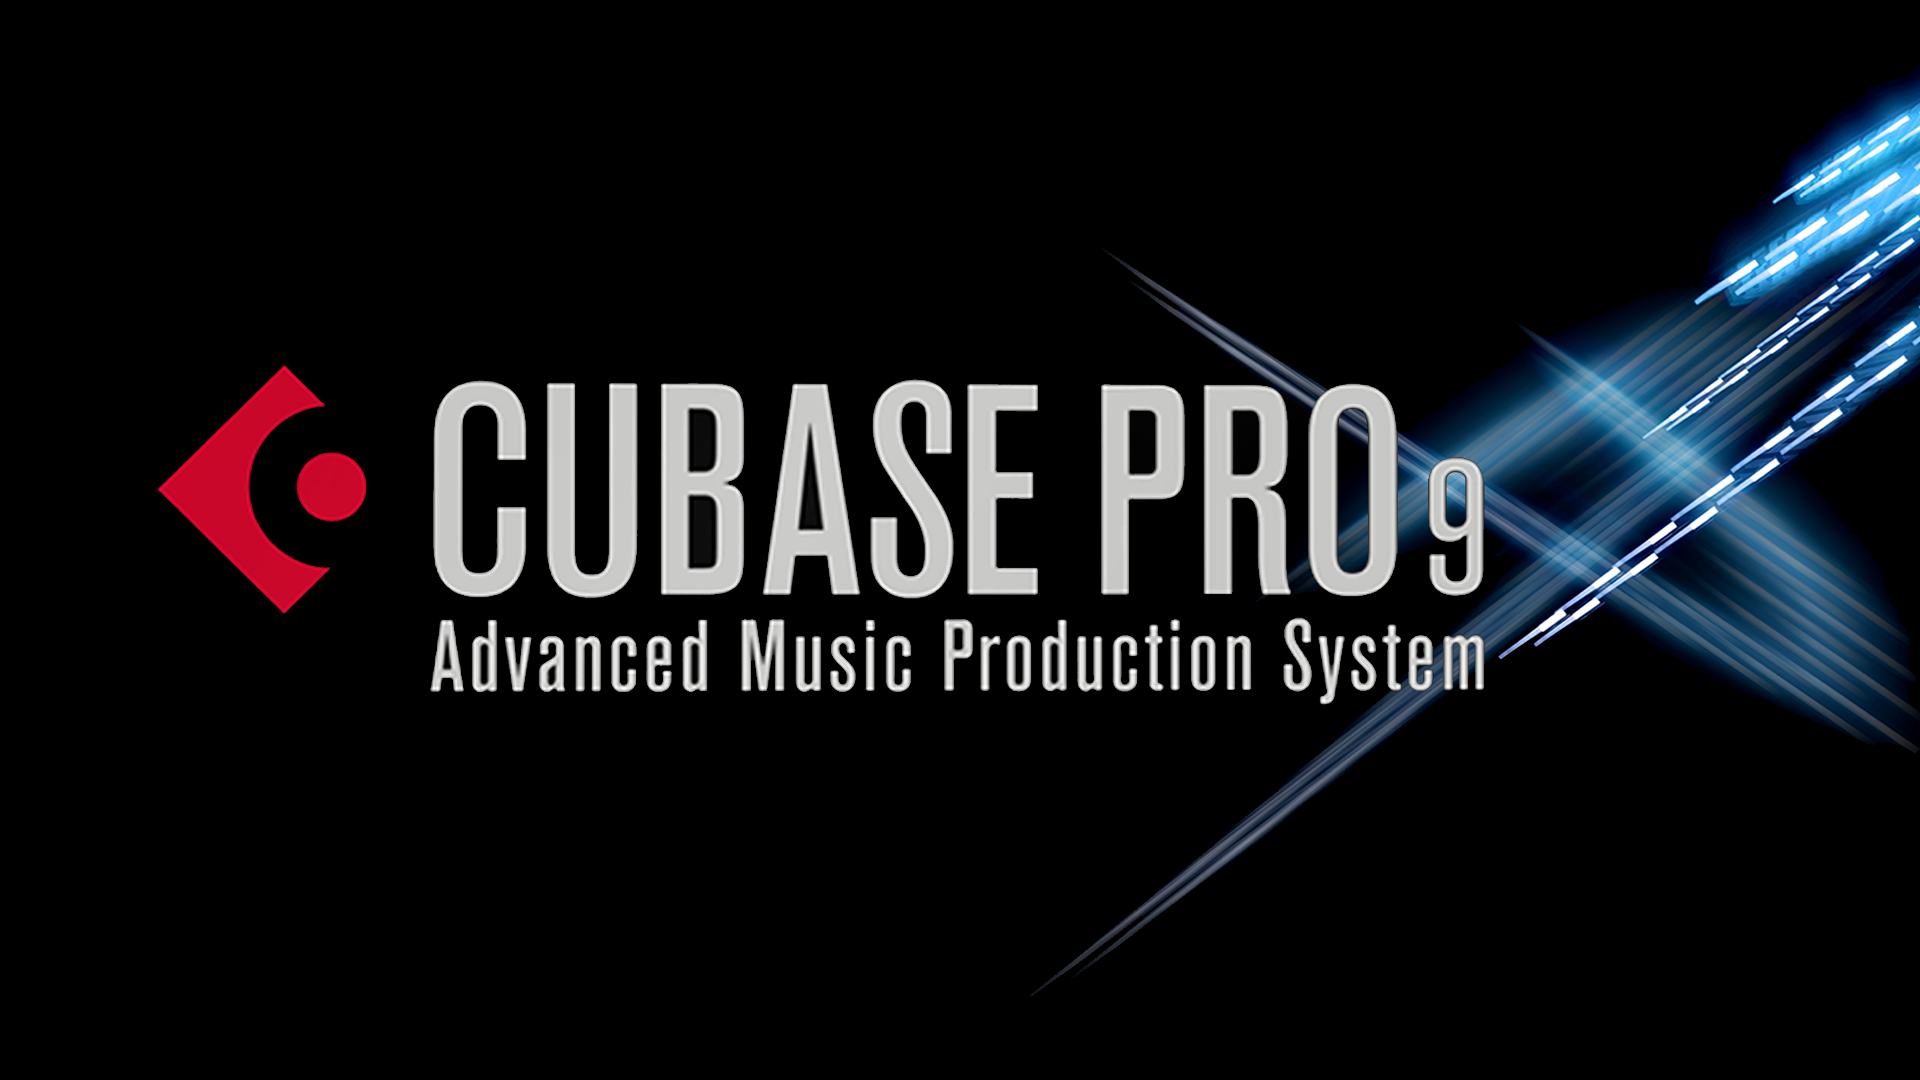 cubase 4 free download full version crack